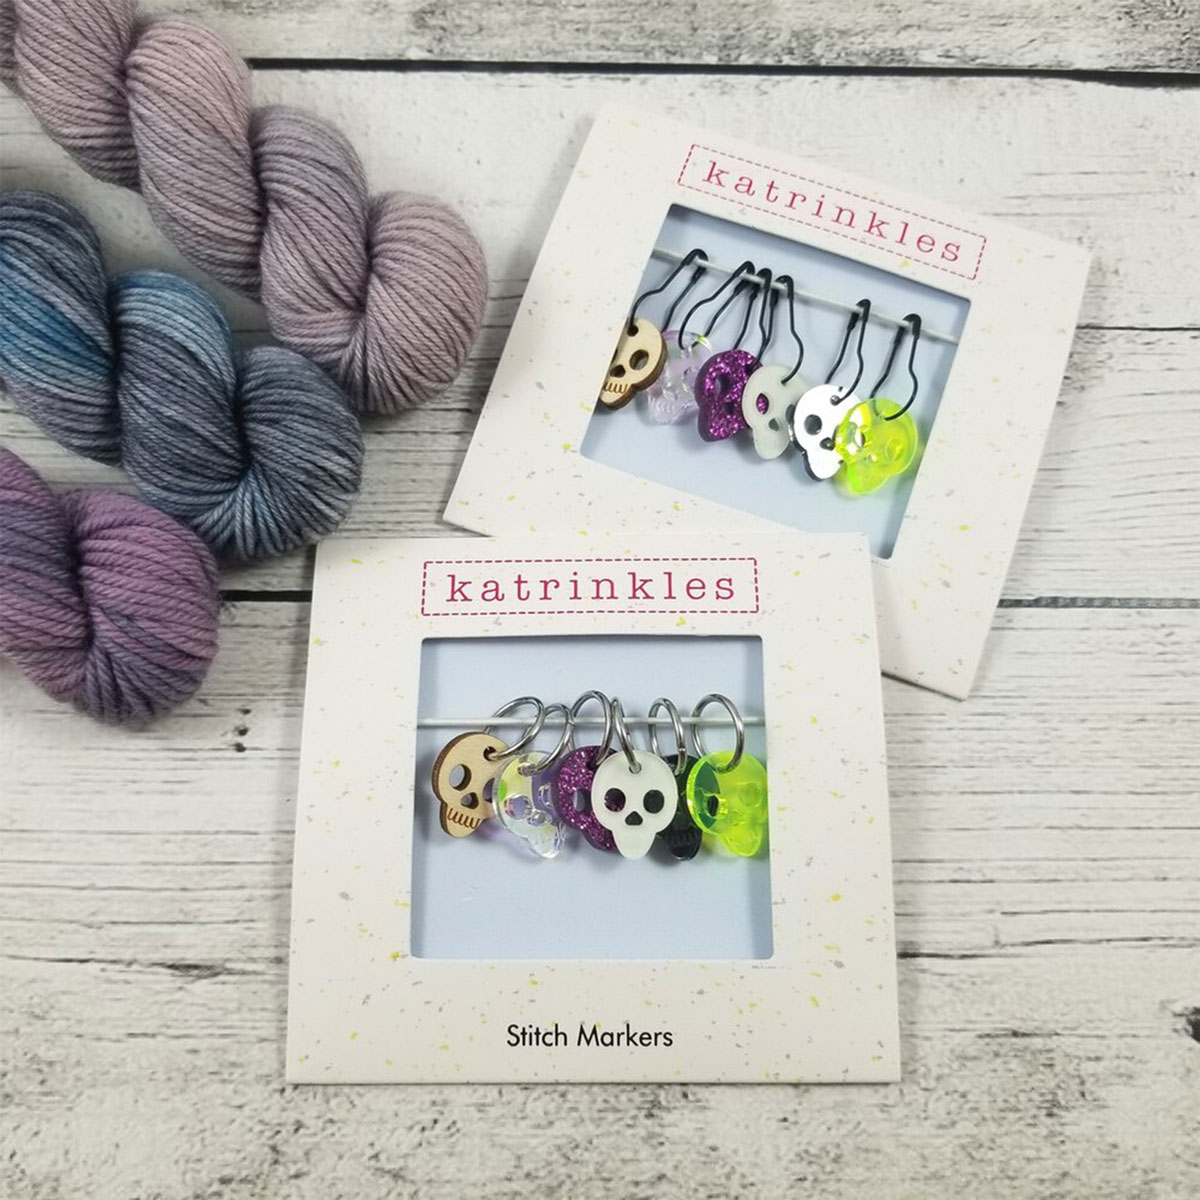 Cocoknits Stitch Markers - Yarn Folk